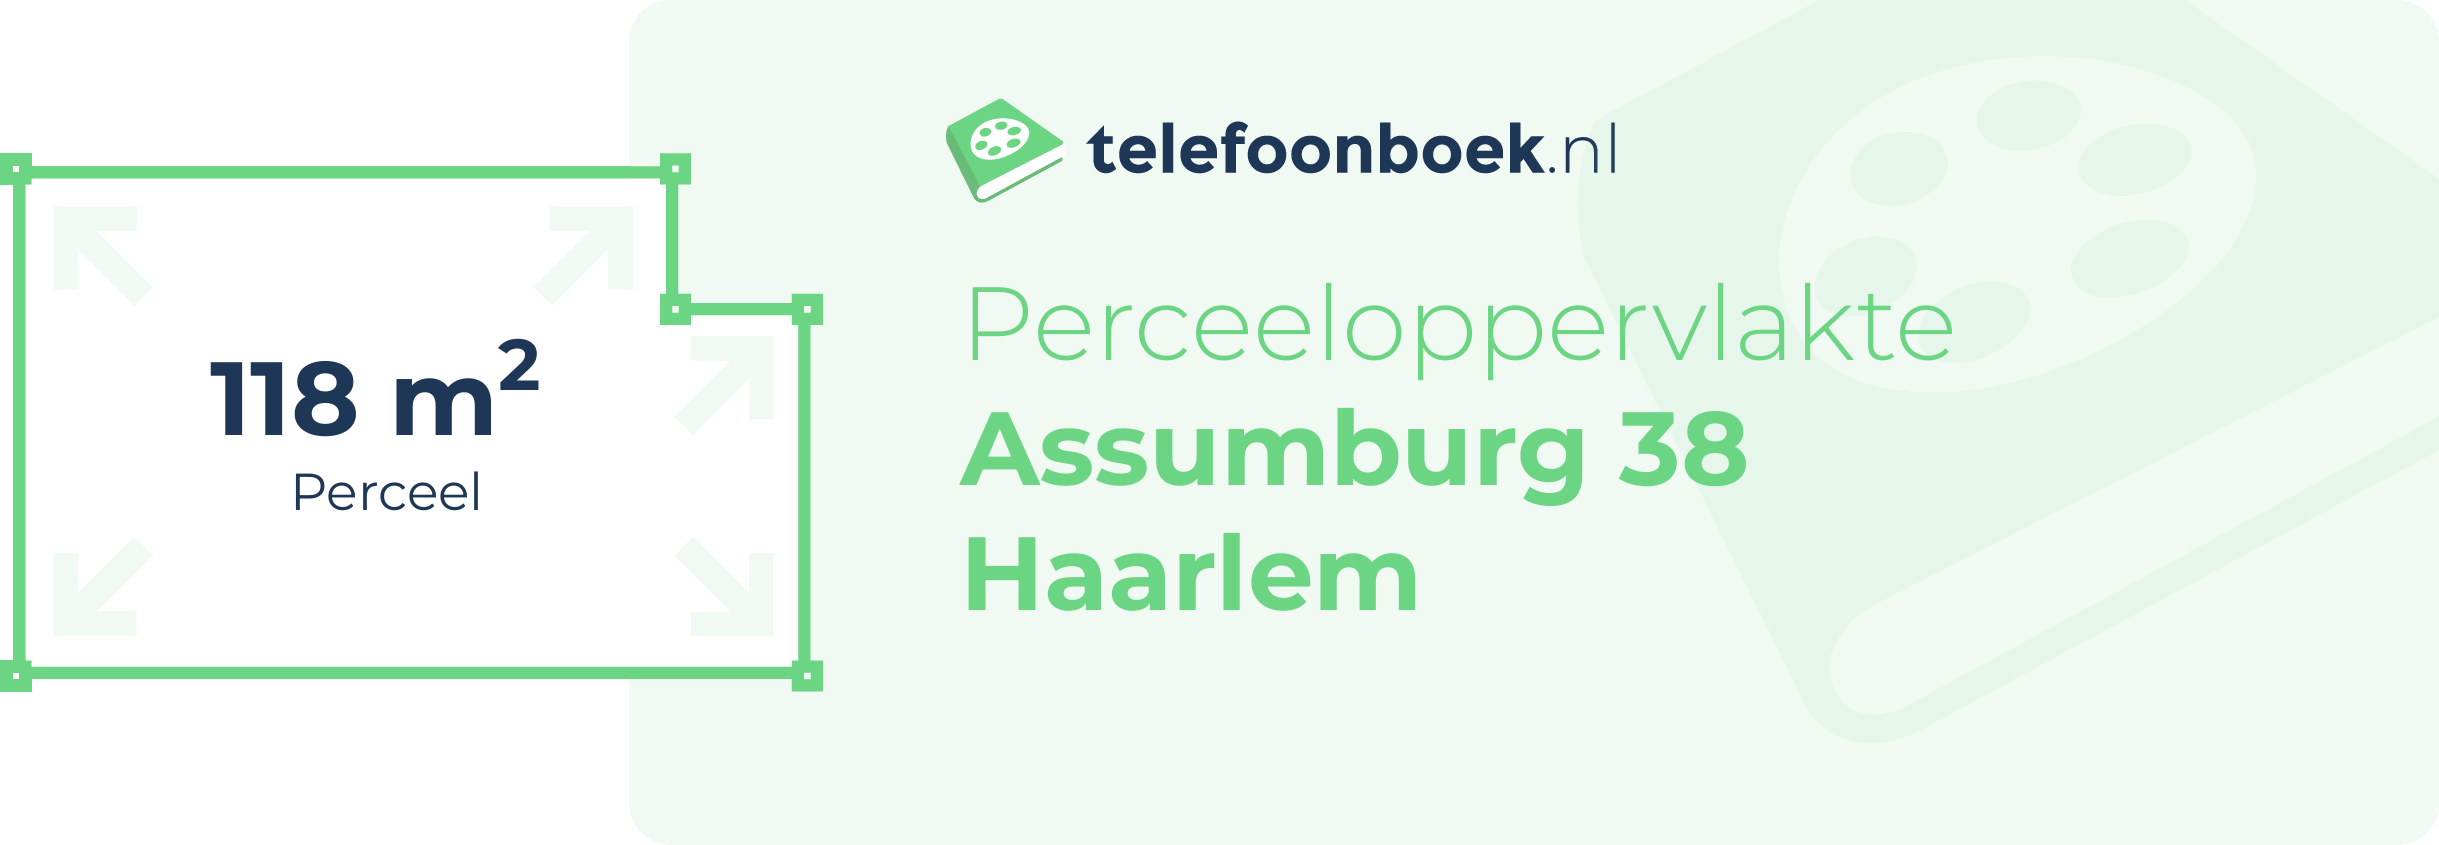 Perceeloppervlakte Assumburg 38 Haarlem